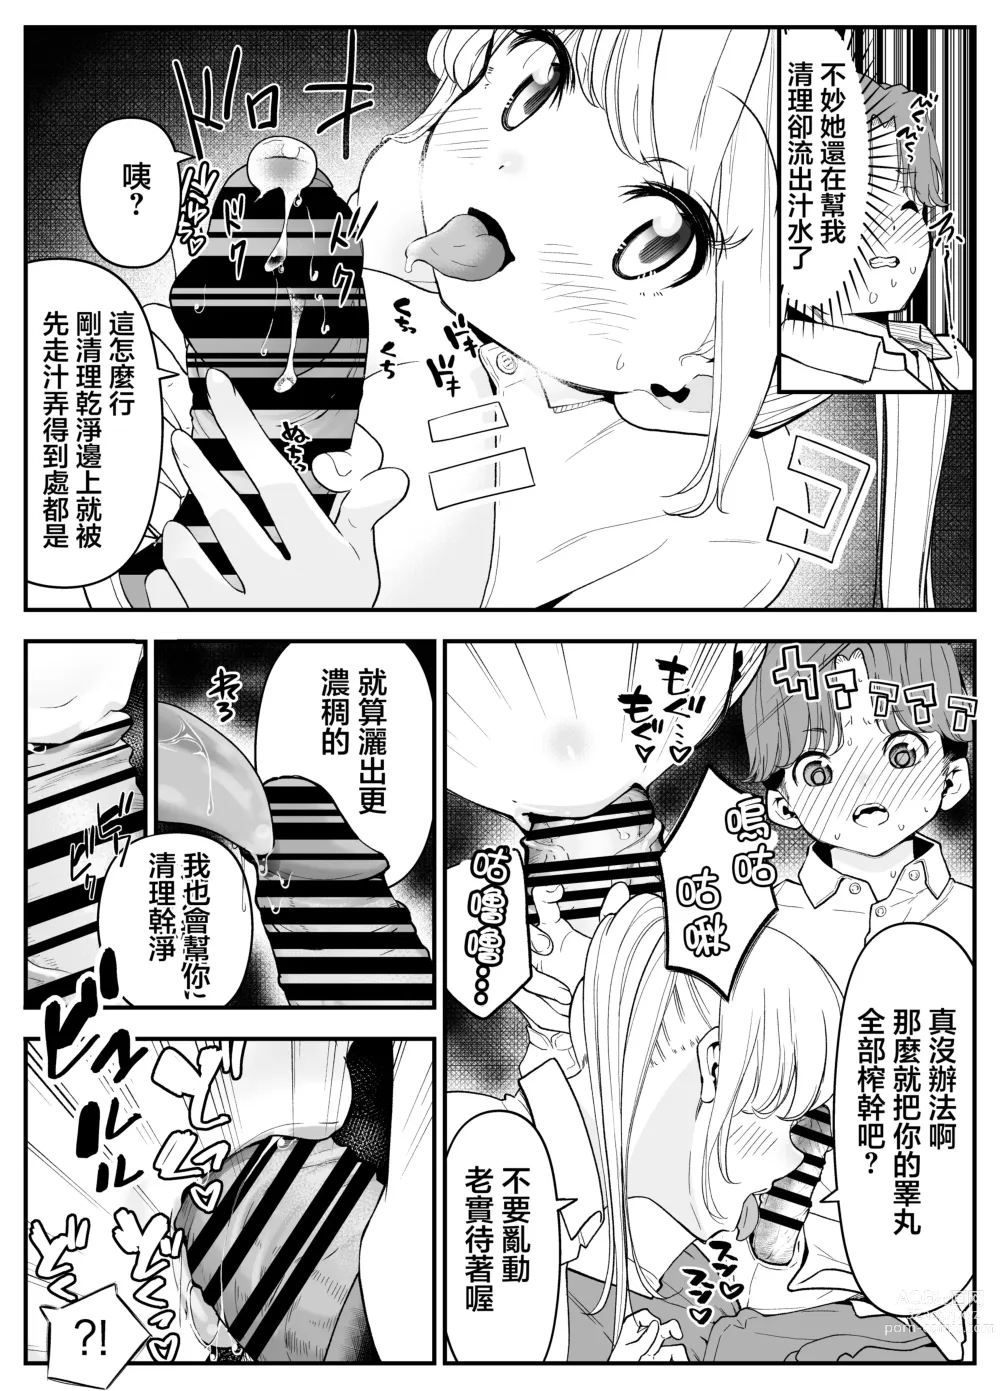 Page 8 of doujinshi 反正結婚之後大家都會SEX要不要和同學一起練習一下?